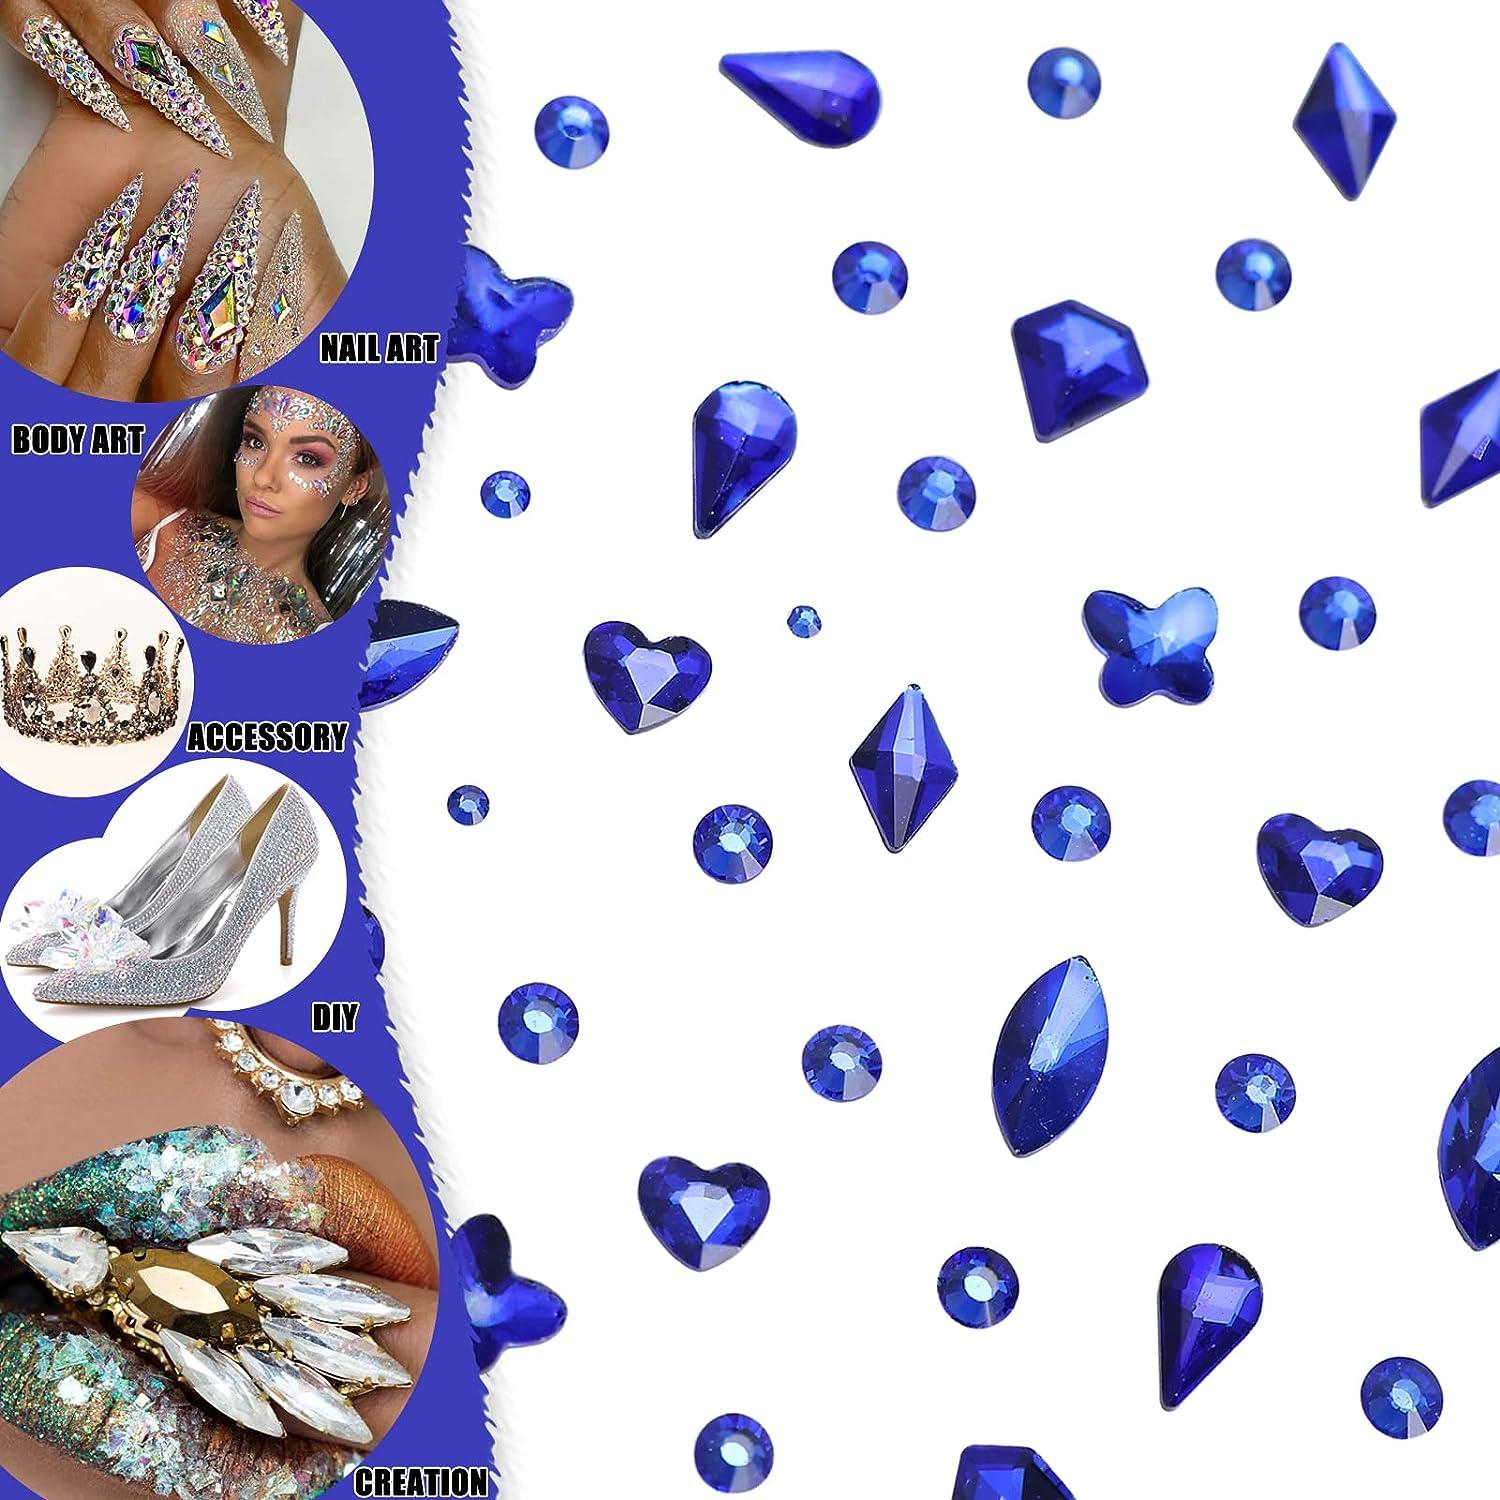 660Pcs Light Blue Nail Rhinestones Blue Crystals Nail Art Diamond Gem Round  Multi Shapes Sizes Flatback Rhinestone for Nail Art DIY Jewelry Crafts  Accessories S11